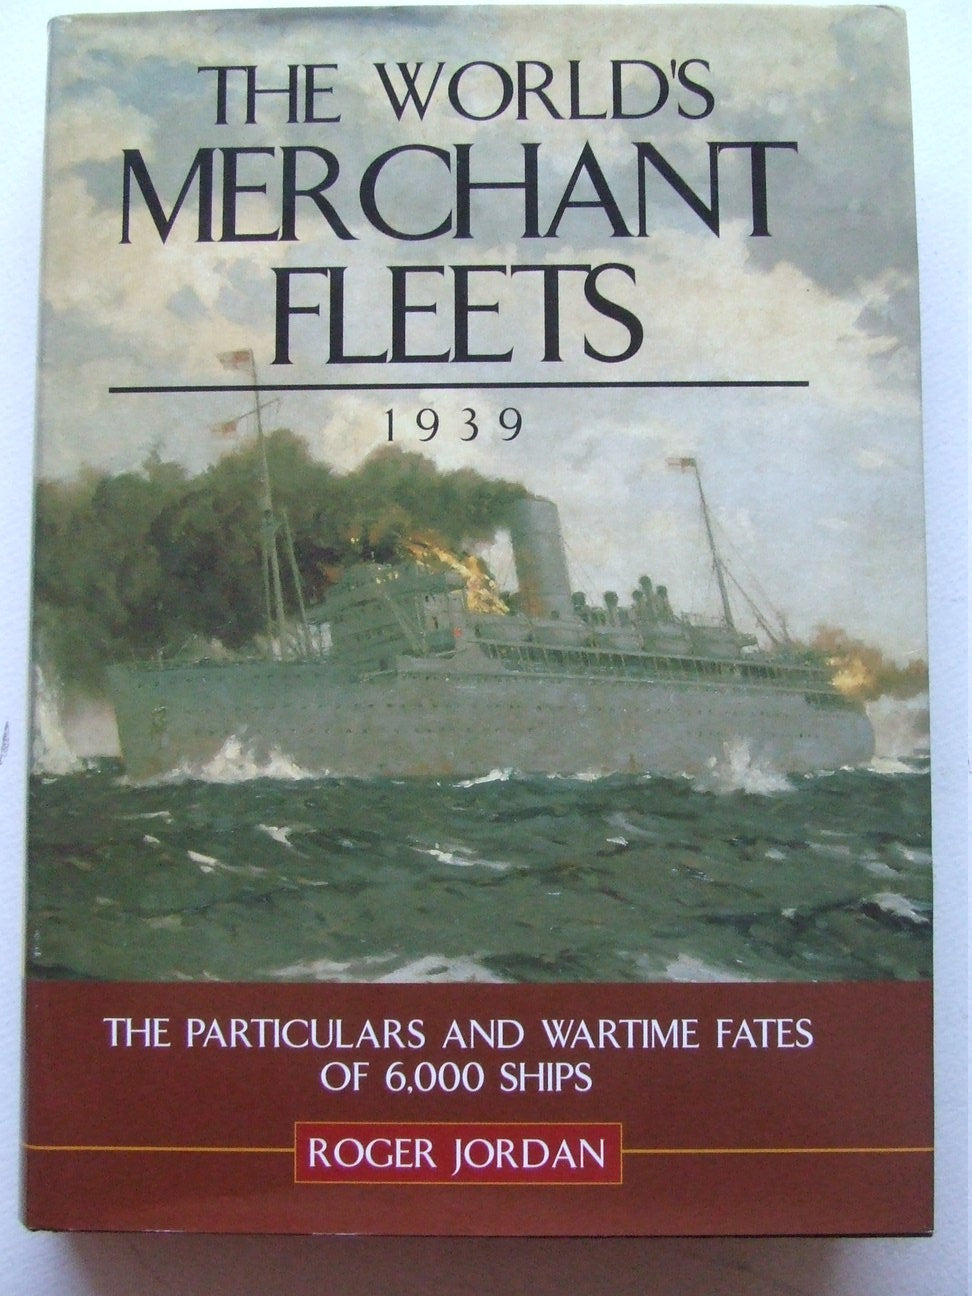 The World's Merchant Fleets 1939